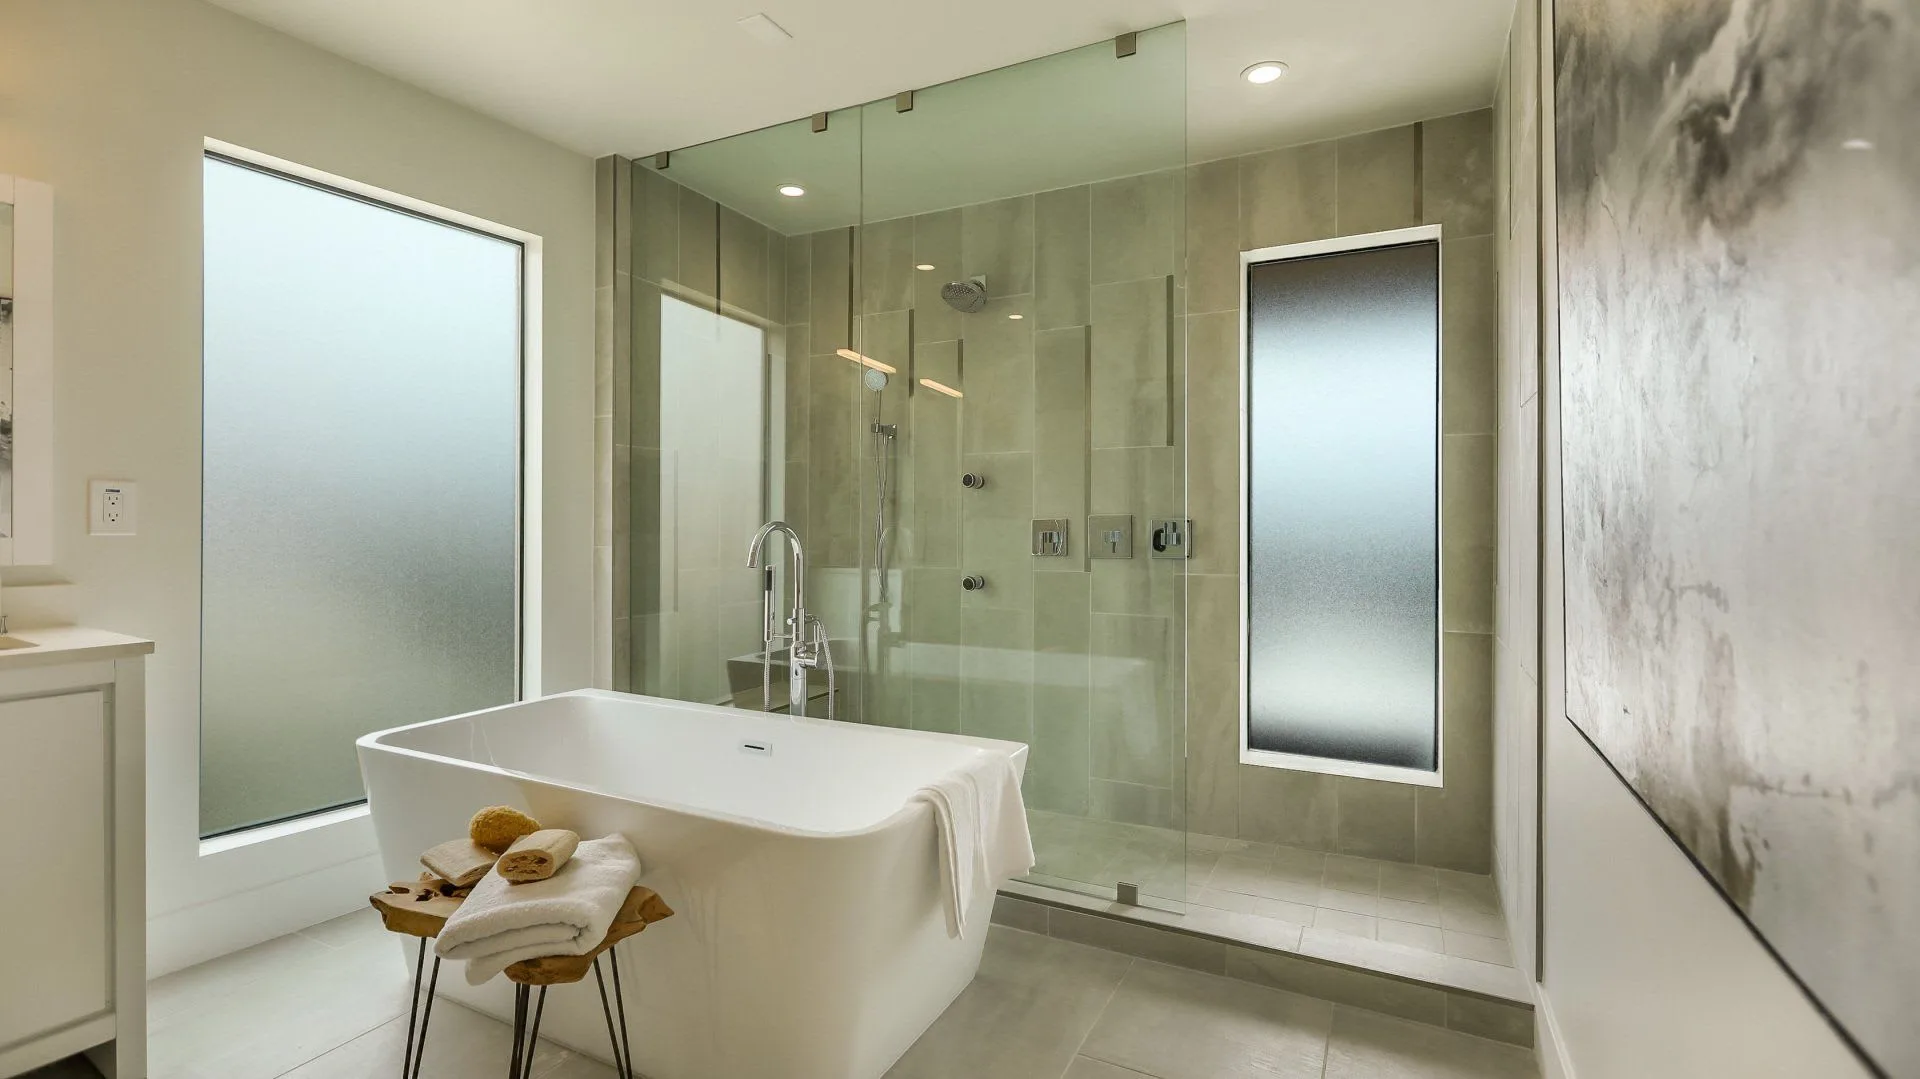 Modern bathroom with bathtub and glass shower enclosure.